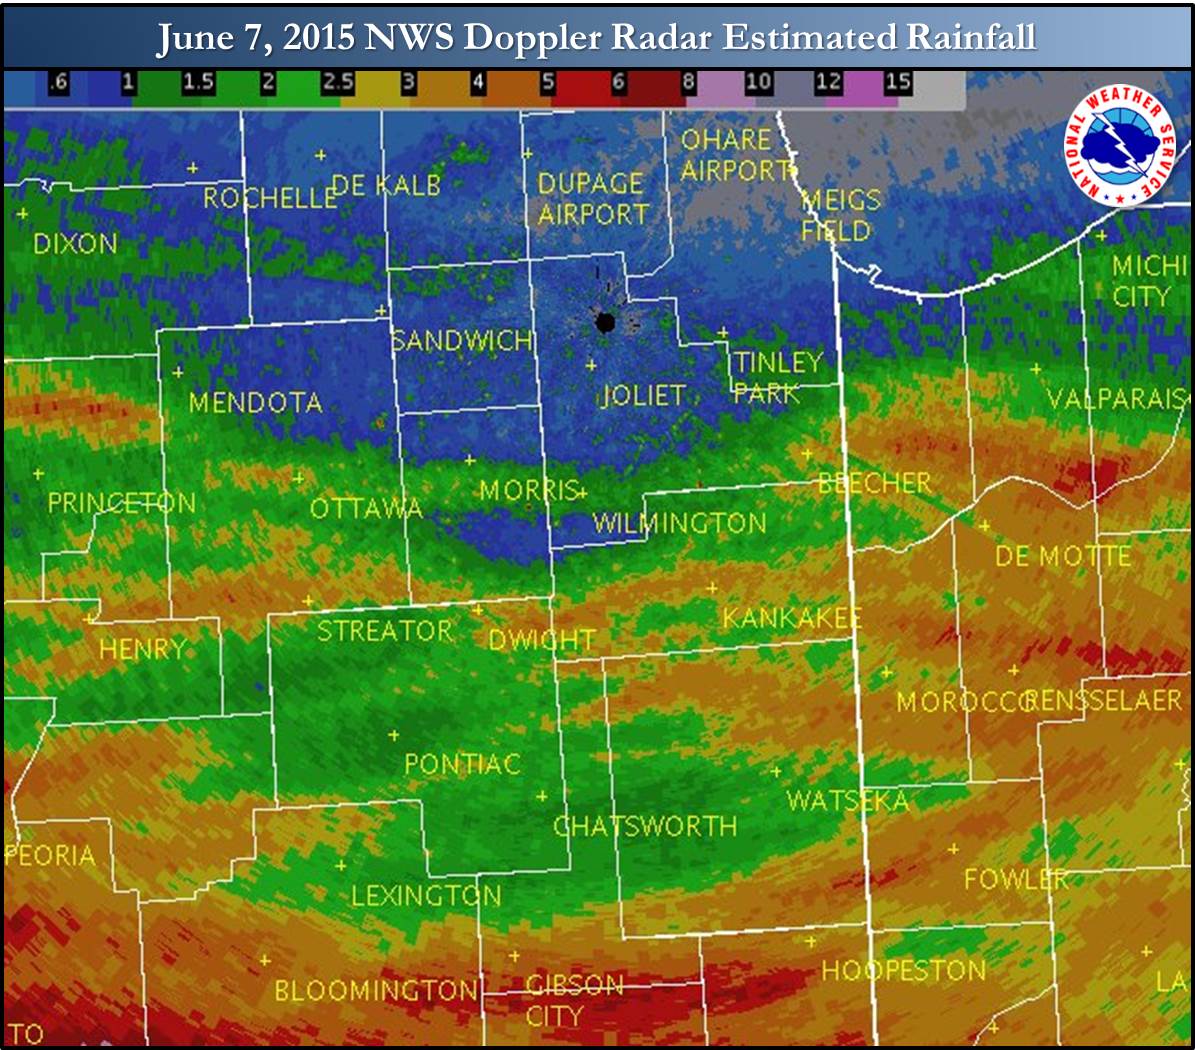 Radar Estimated Rainfall